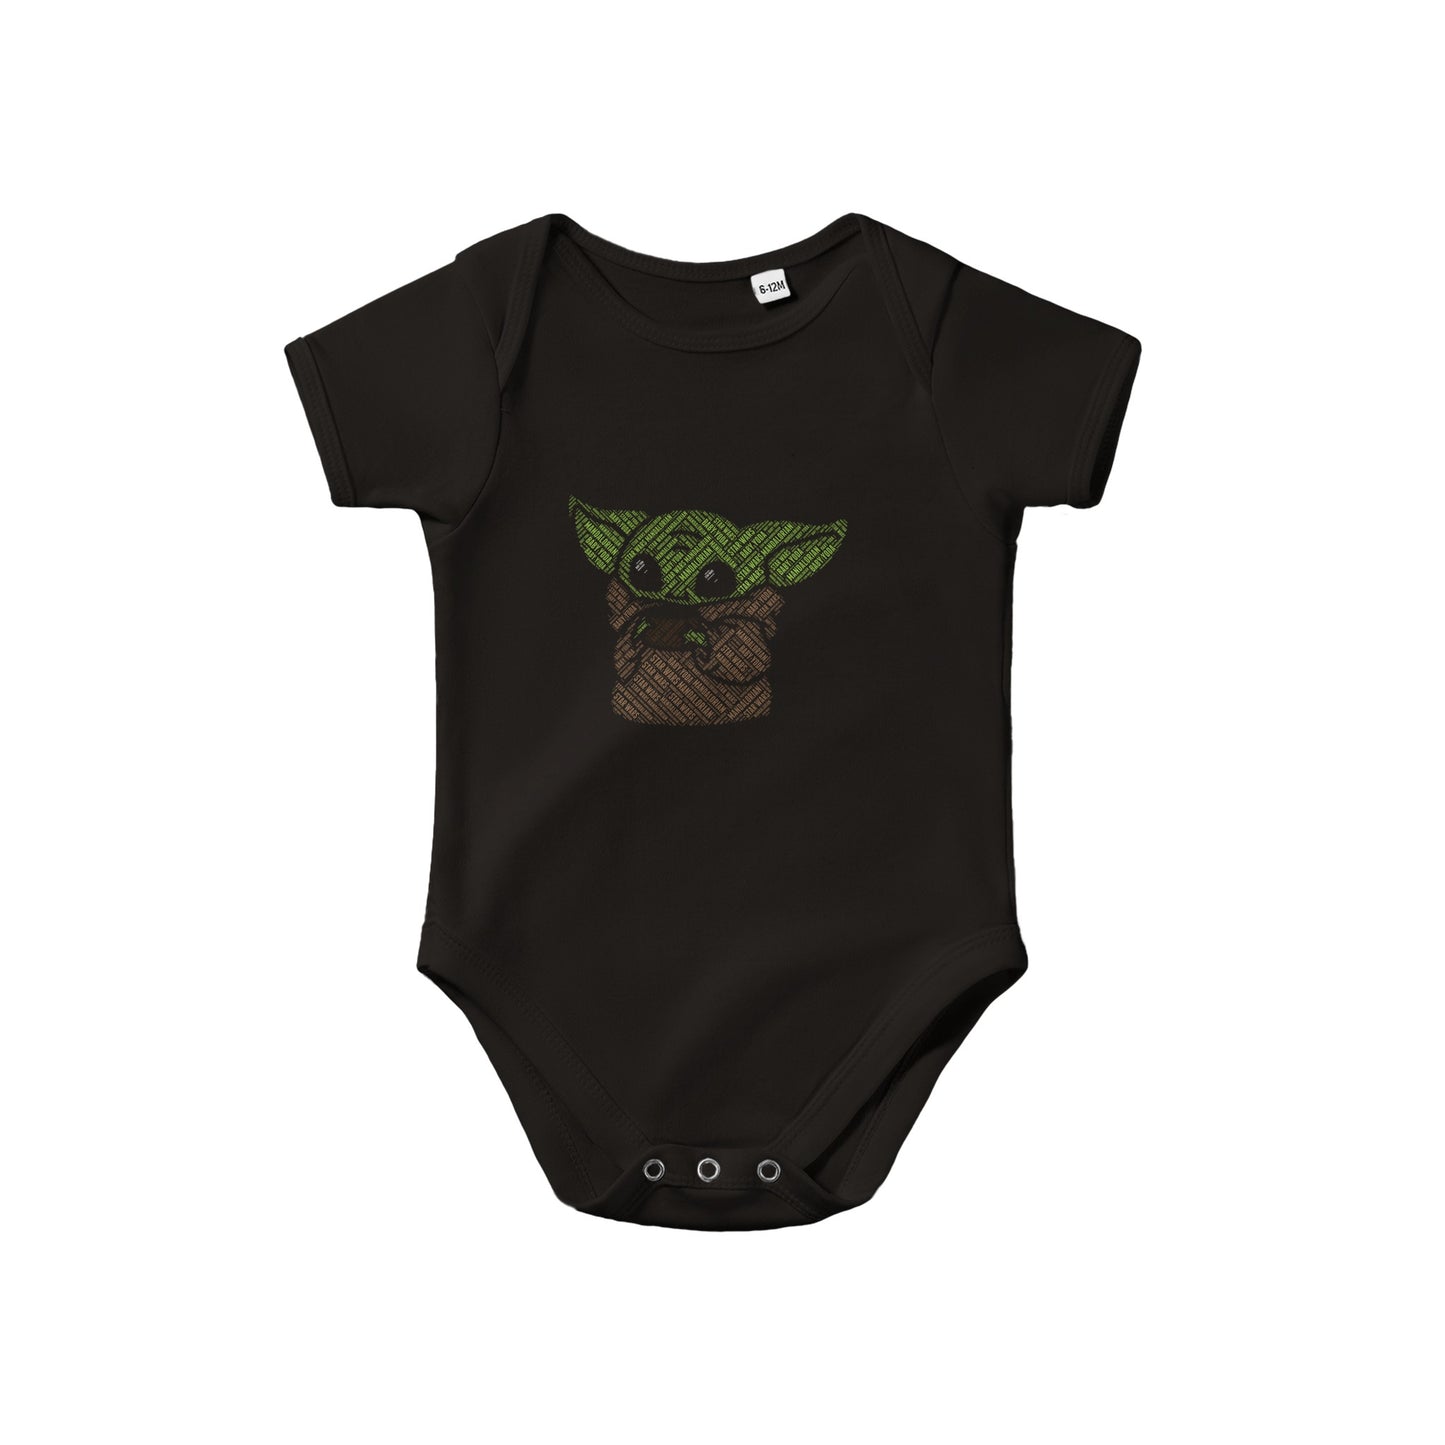 Classic Onesie Baby Bodysuit - Baby Yoda Calligram Artwork 